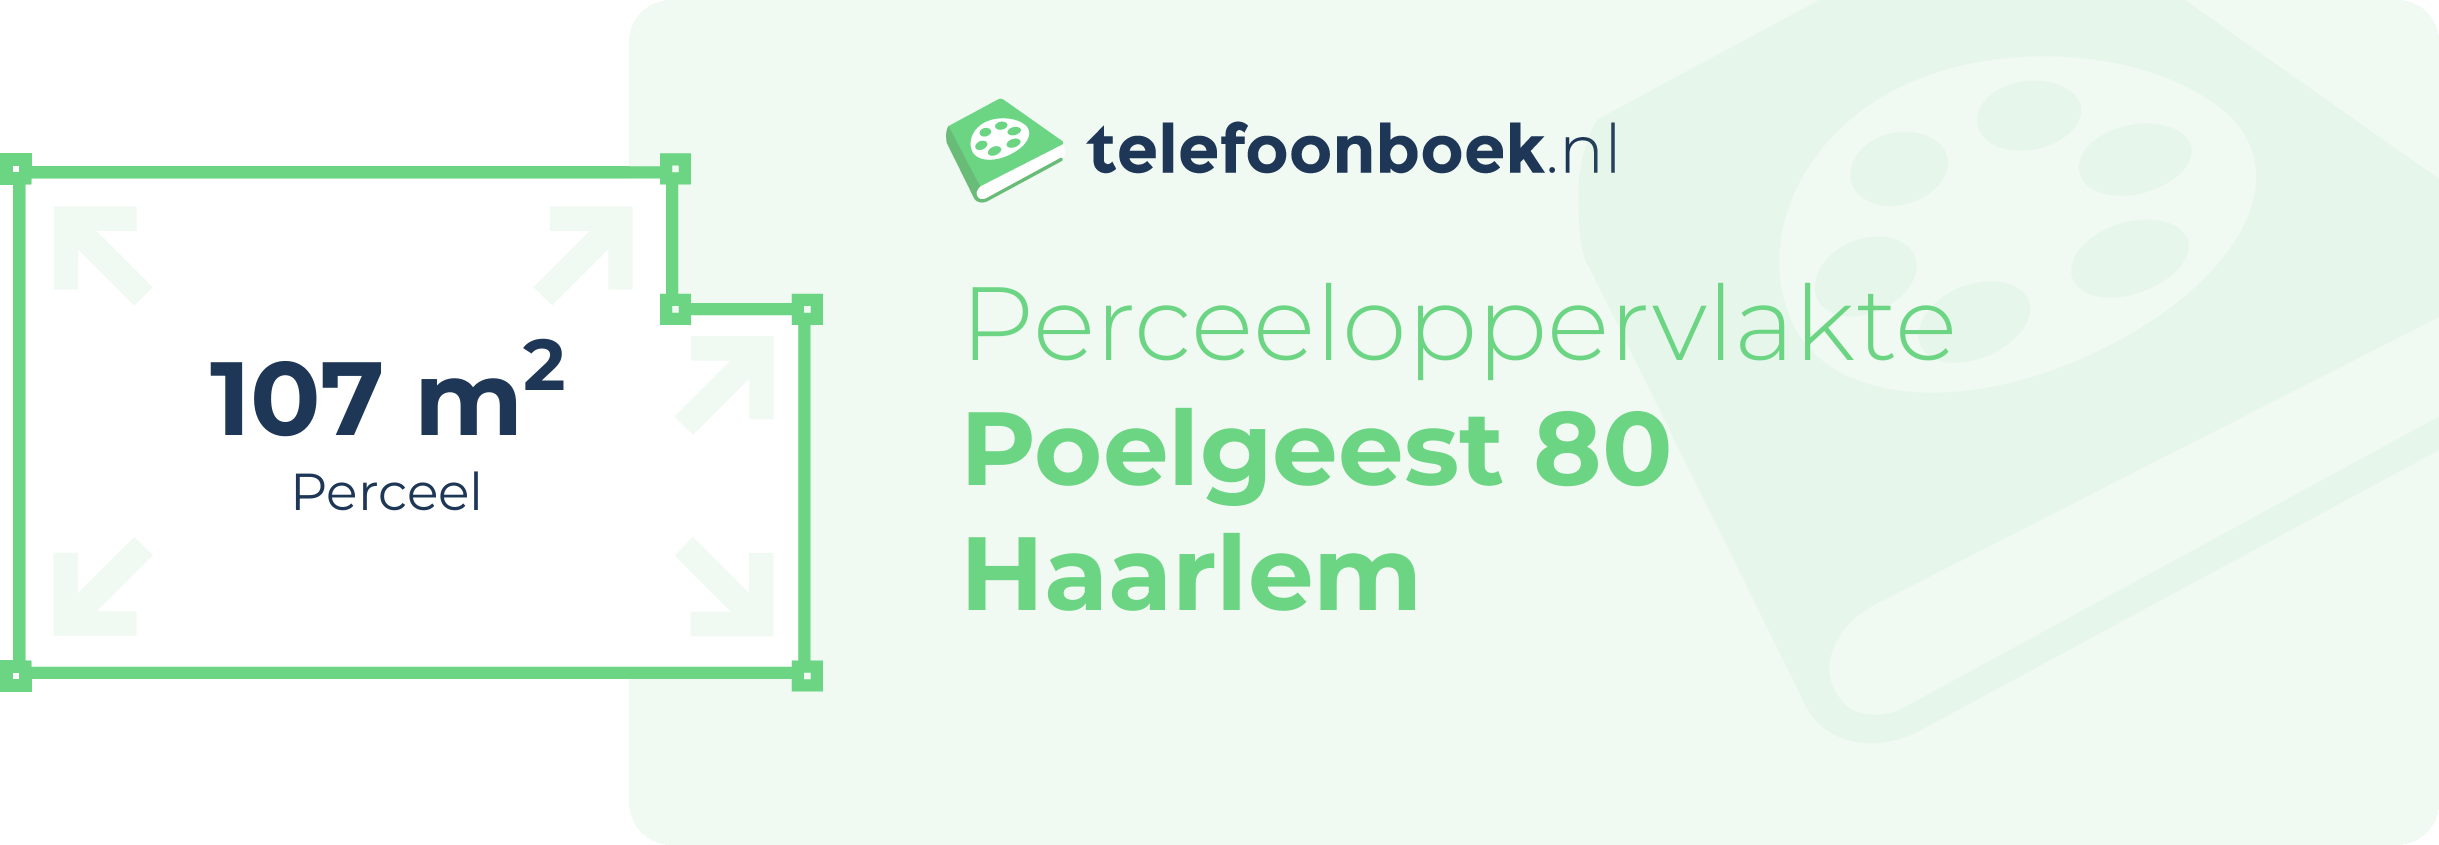 Perceeloppervlakte Poelgeest 80 Haarlem